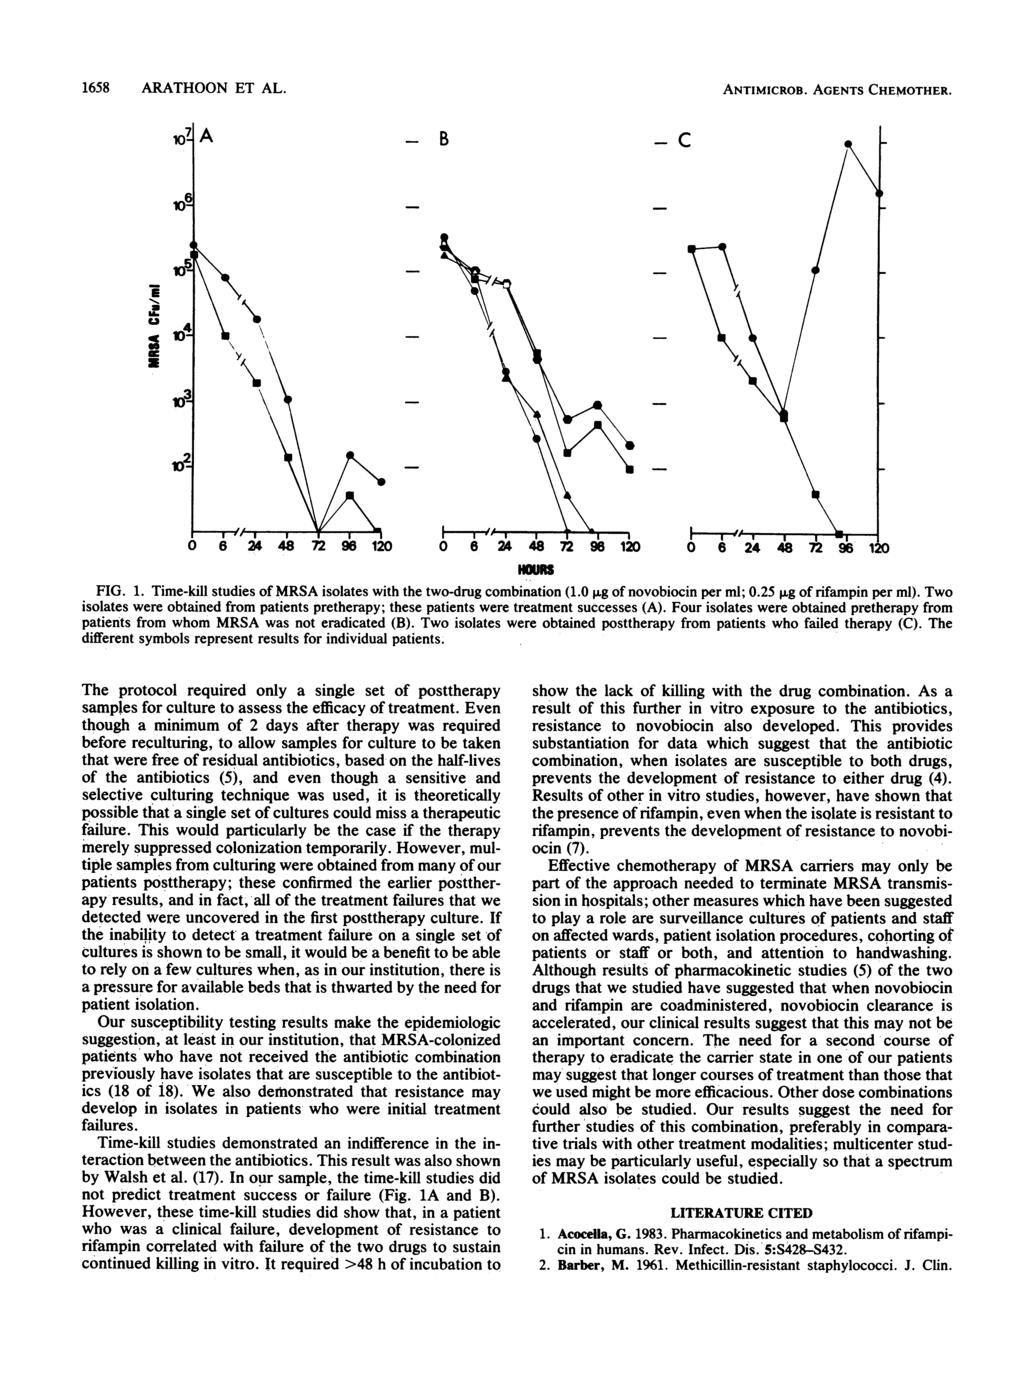 1658 ARATHOON ET AL. ANTIMICROB. AGENTS CHEMOTHER. A - B - c I U al 6 24 48 7 HOURS FIG. 1. Time-kill studies of MRSA isolates with the two-drug combination (1.0,ug of novobiocin per ml; 0.